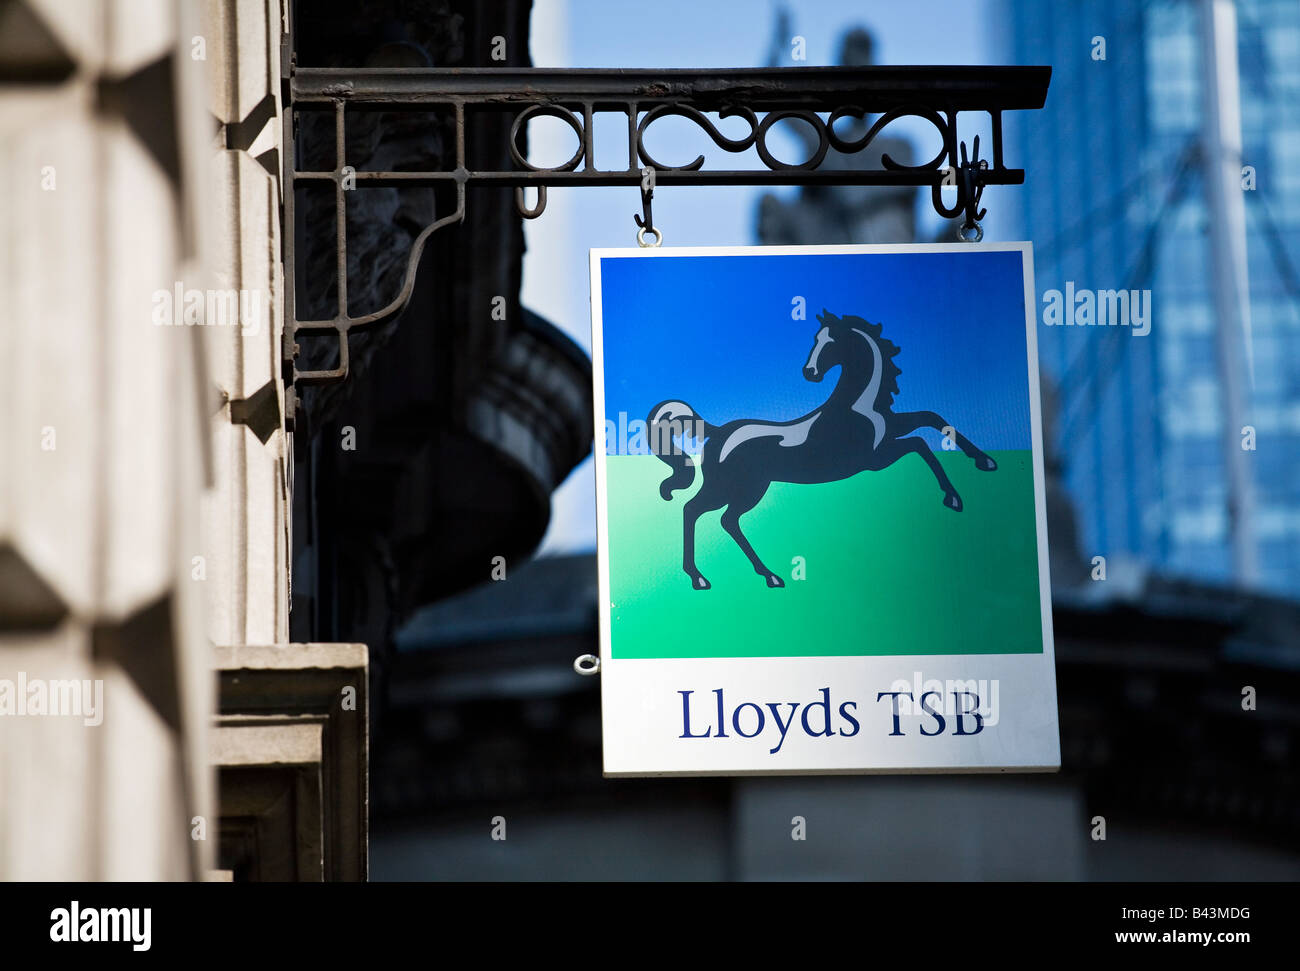 Lloyds TSB bank branch in City of London Stock Photo